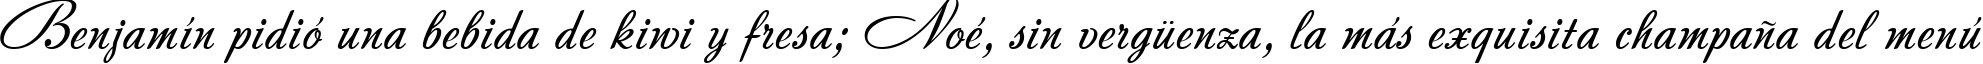 Пример написания шрифтом Andantino script текста на испанском